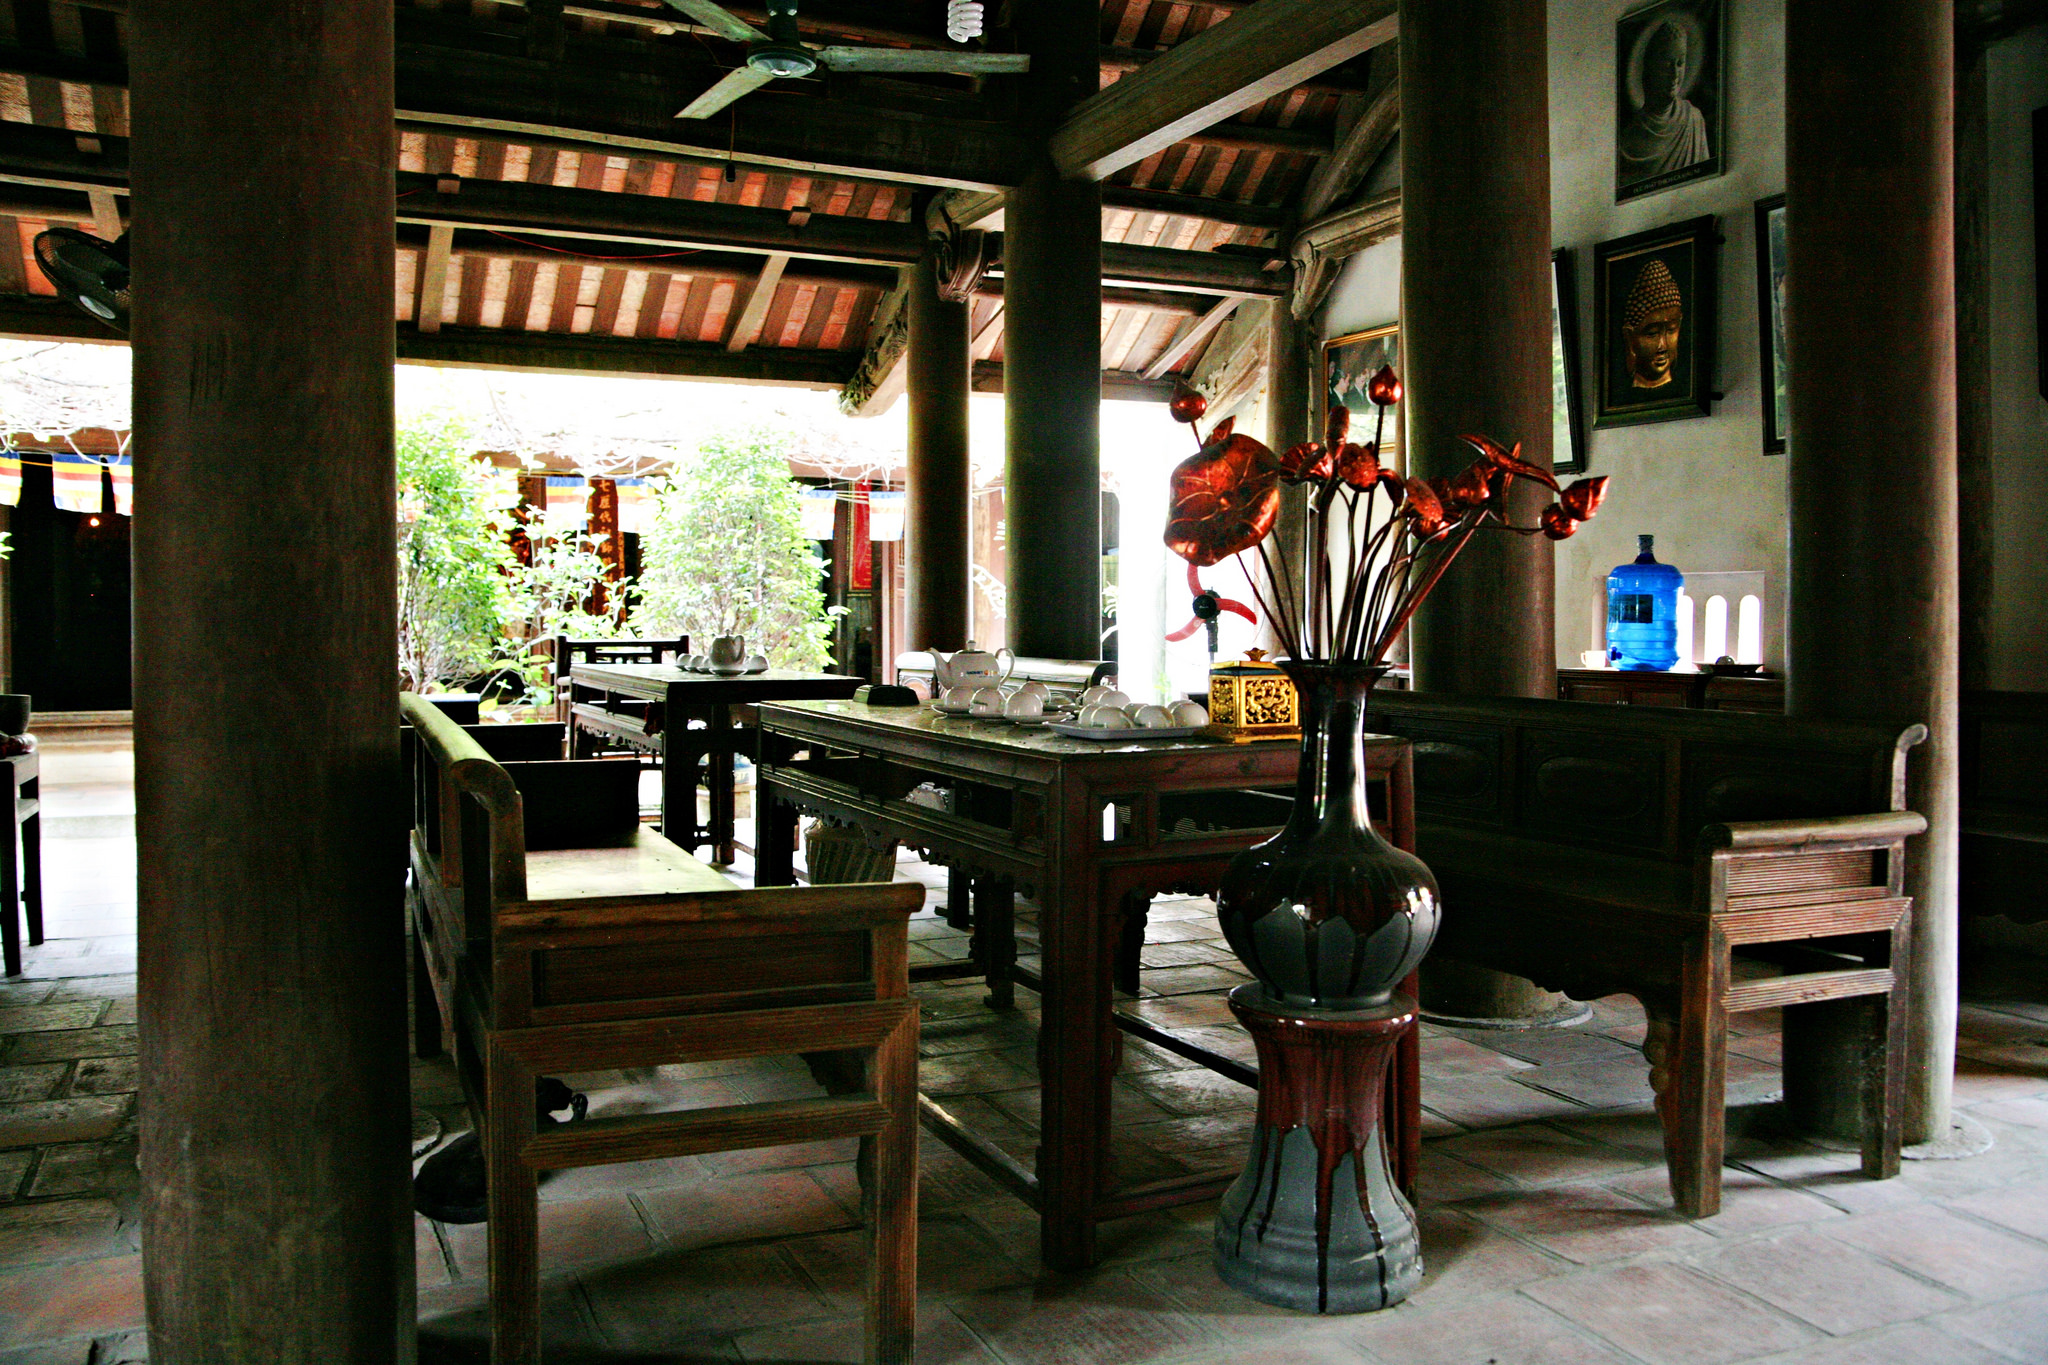 interior at Duc La Pagoda, Vietnam